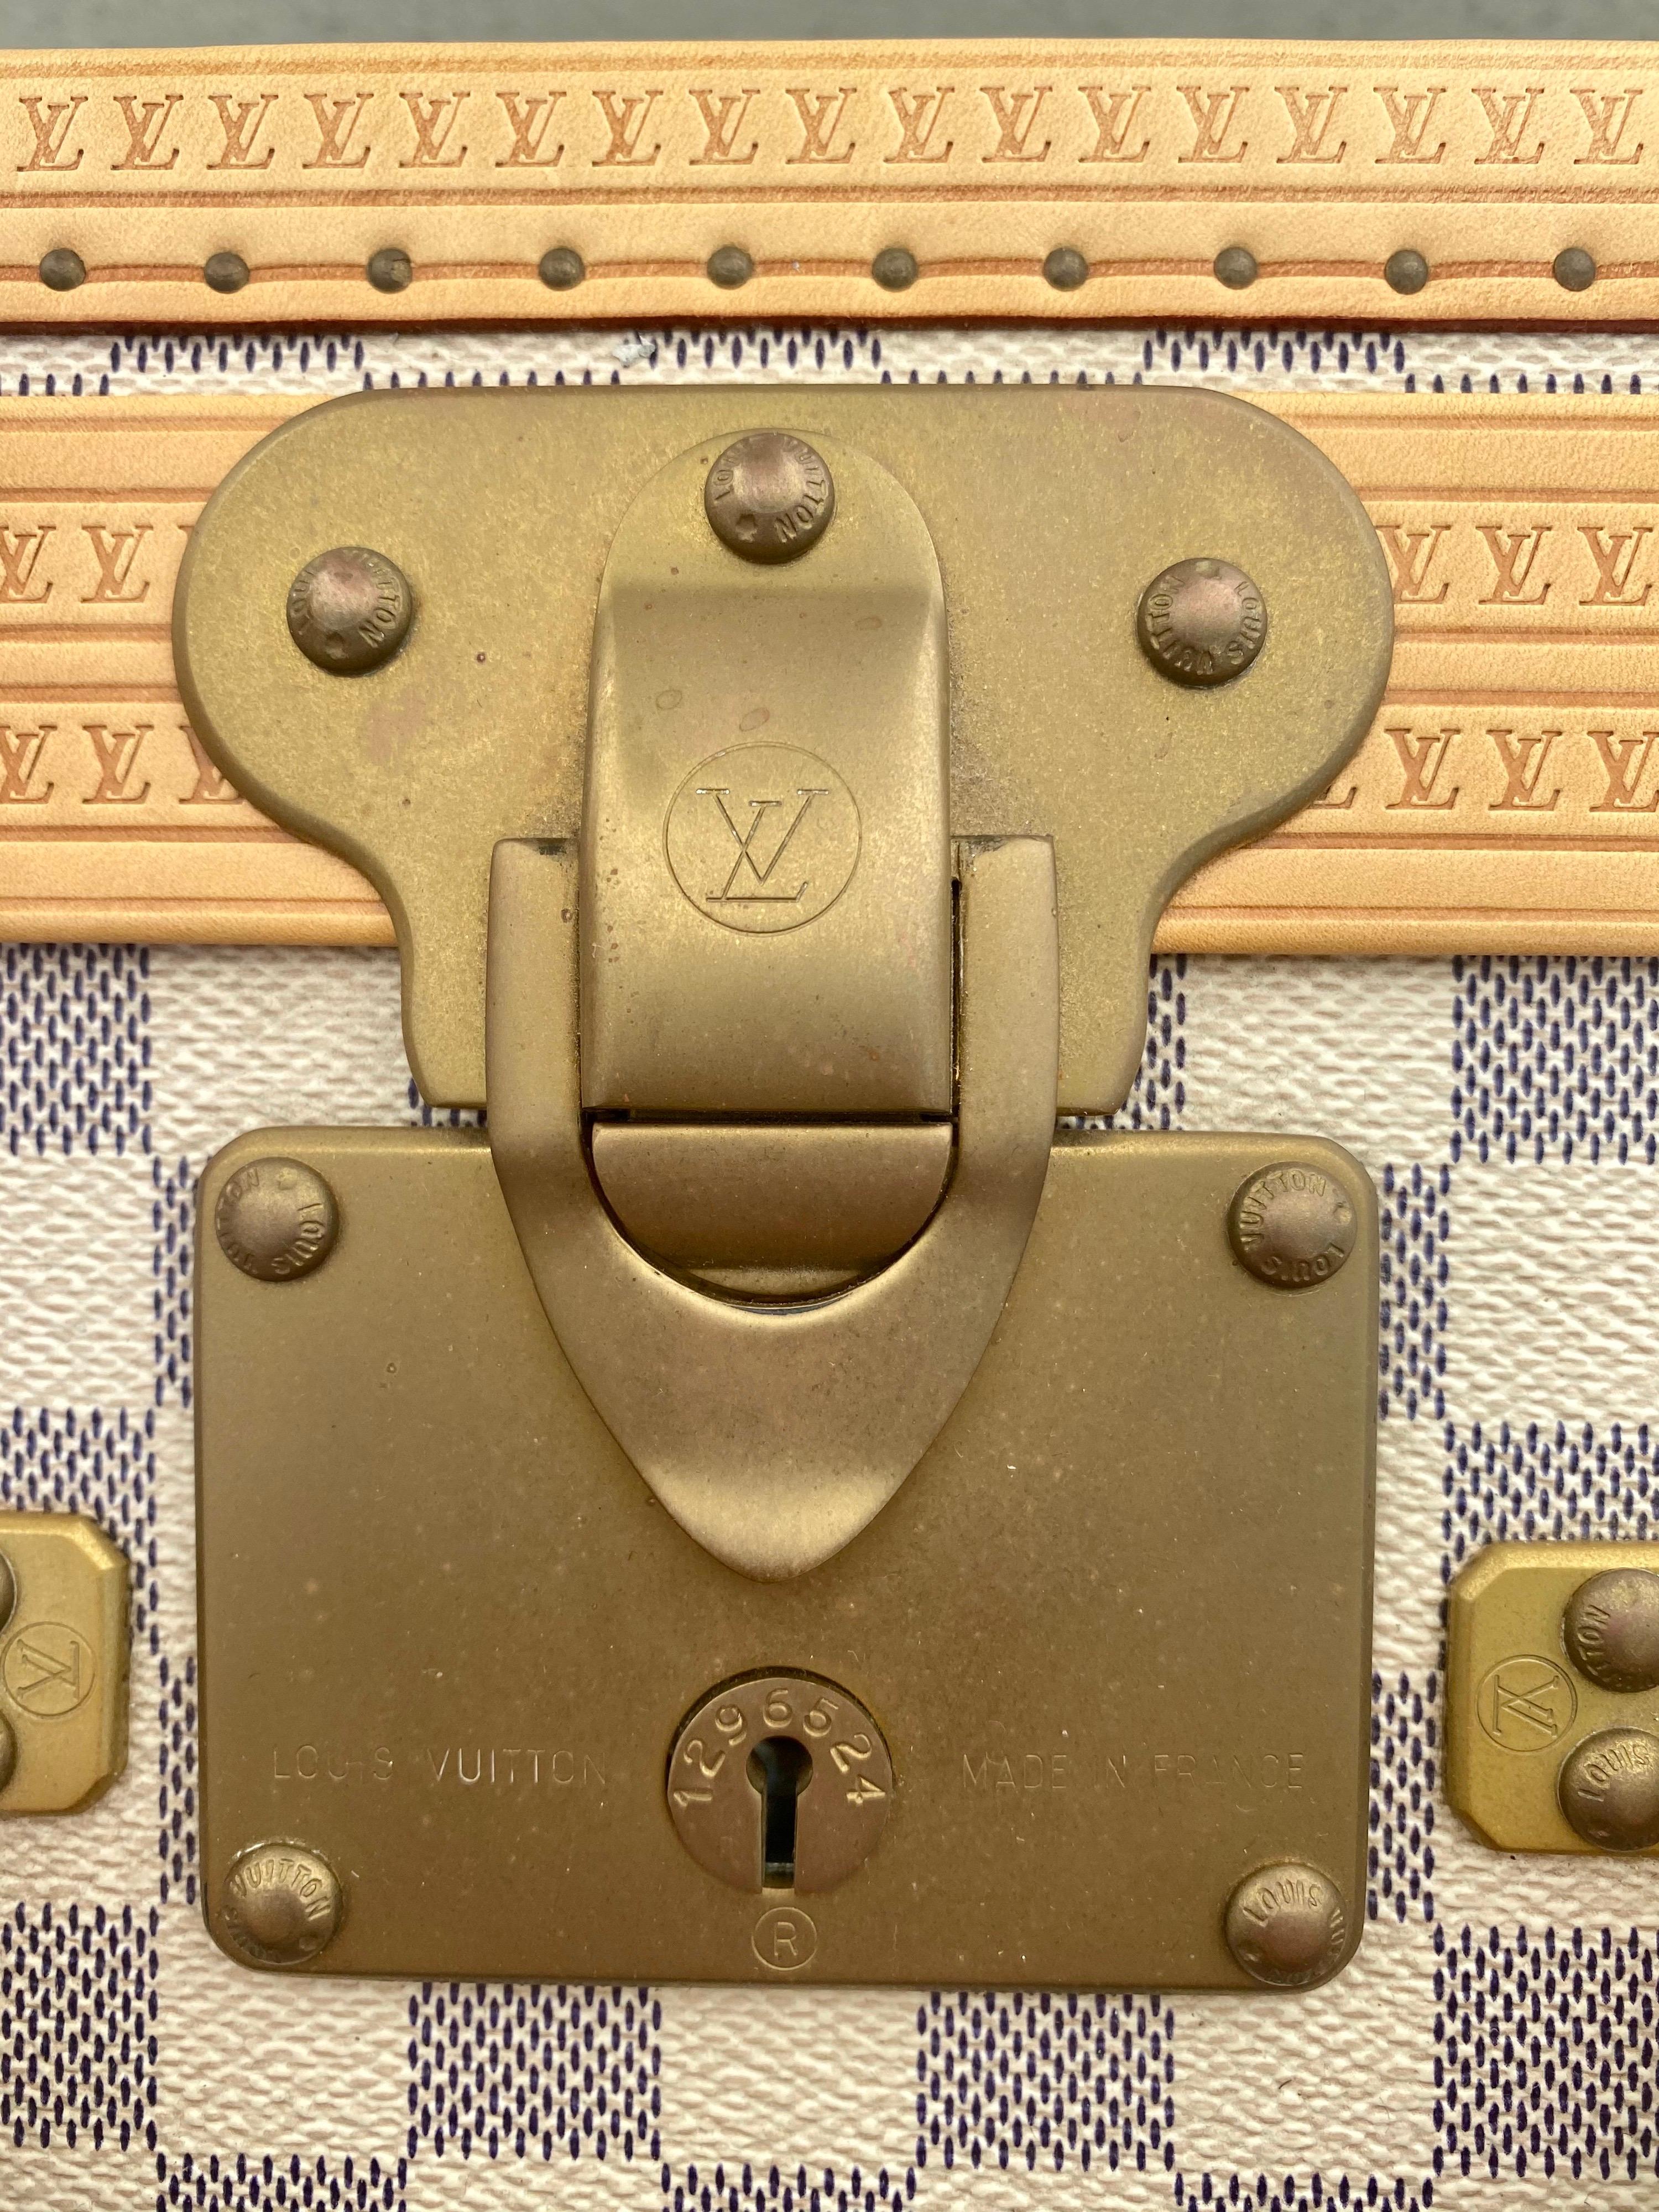 New Louis Vuitton Limited Edition Alzer Damier Azur Rare Travel Trunk 75cm For Sale 9